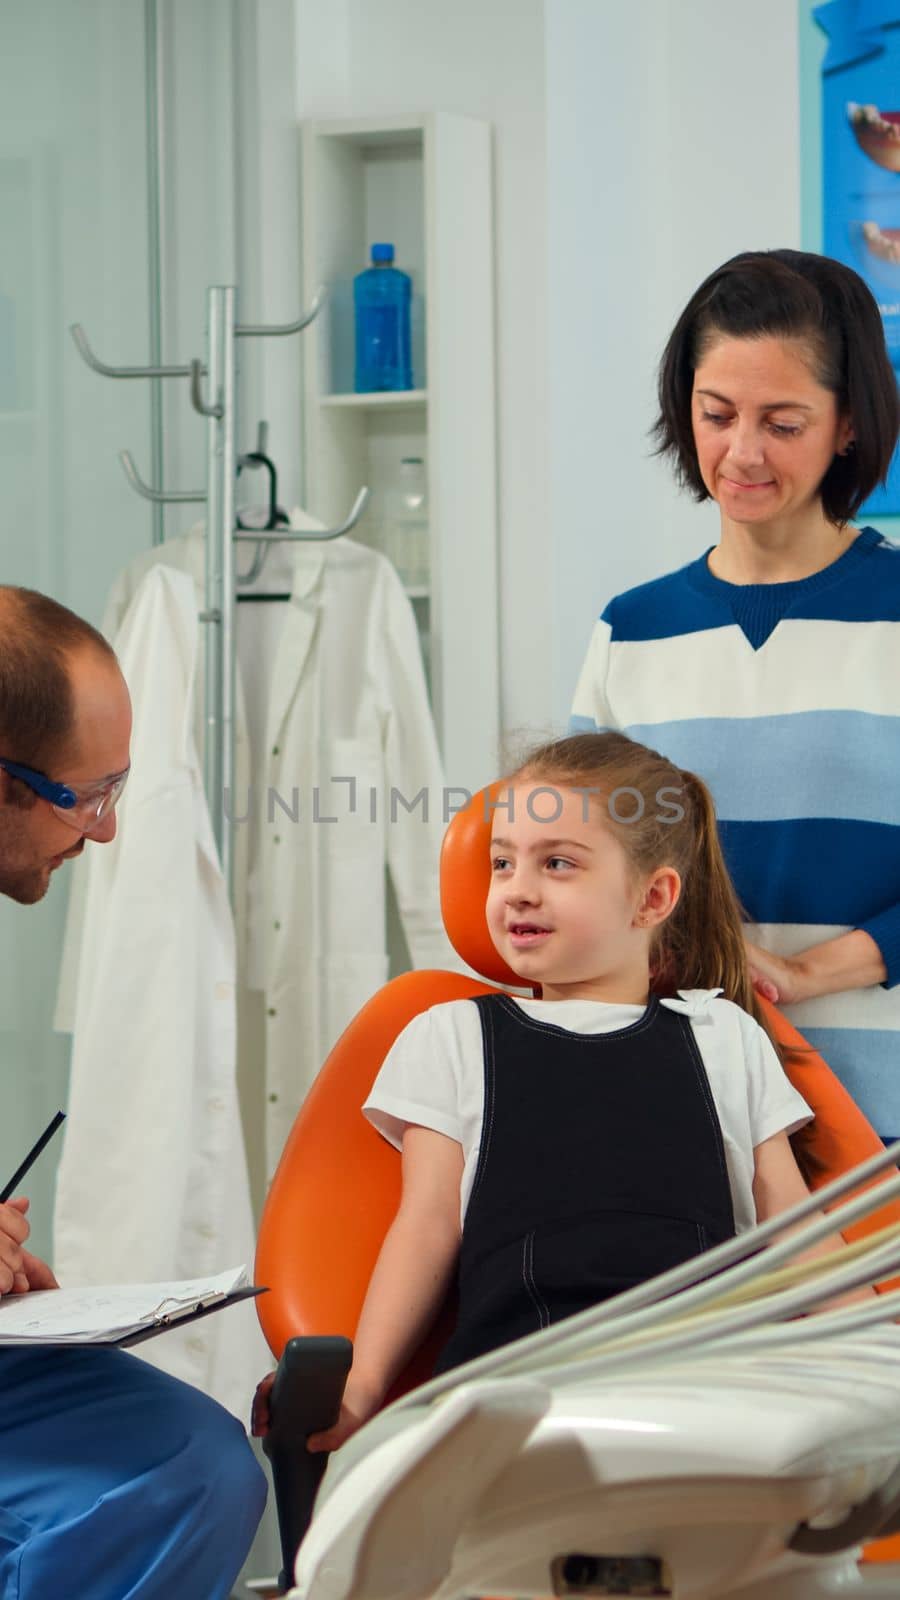 Friendly man dentist assistant interrogating kid patient by DCStudio